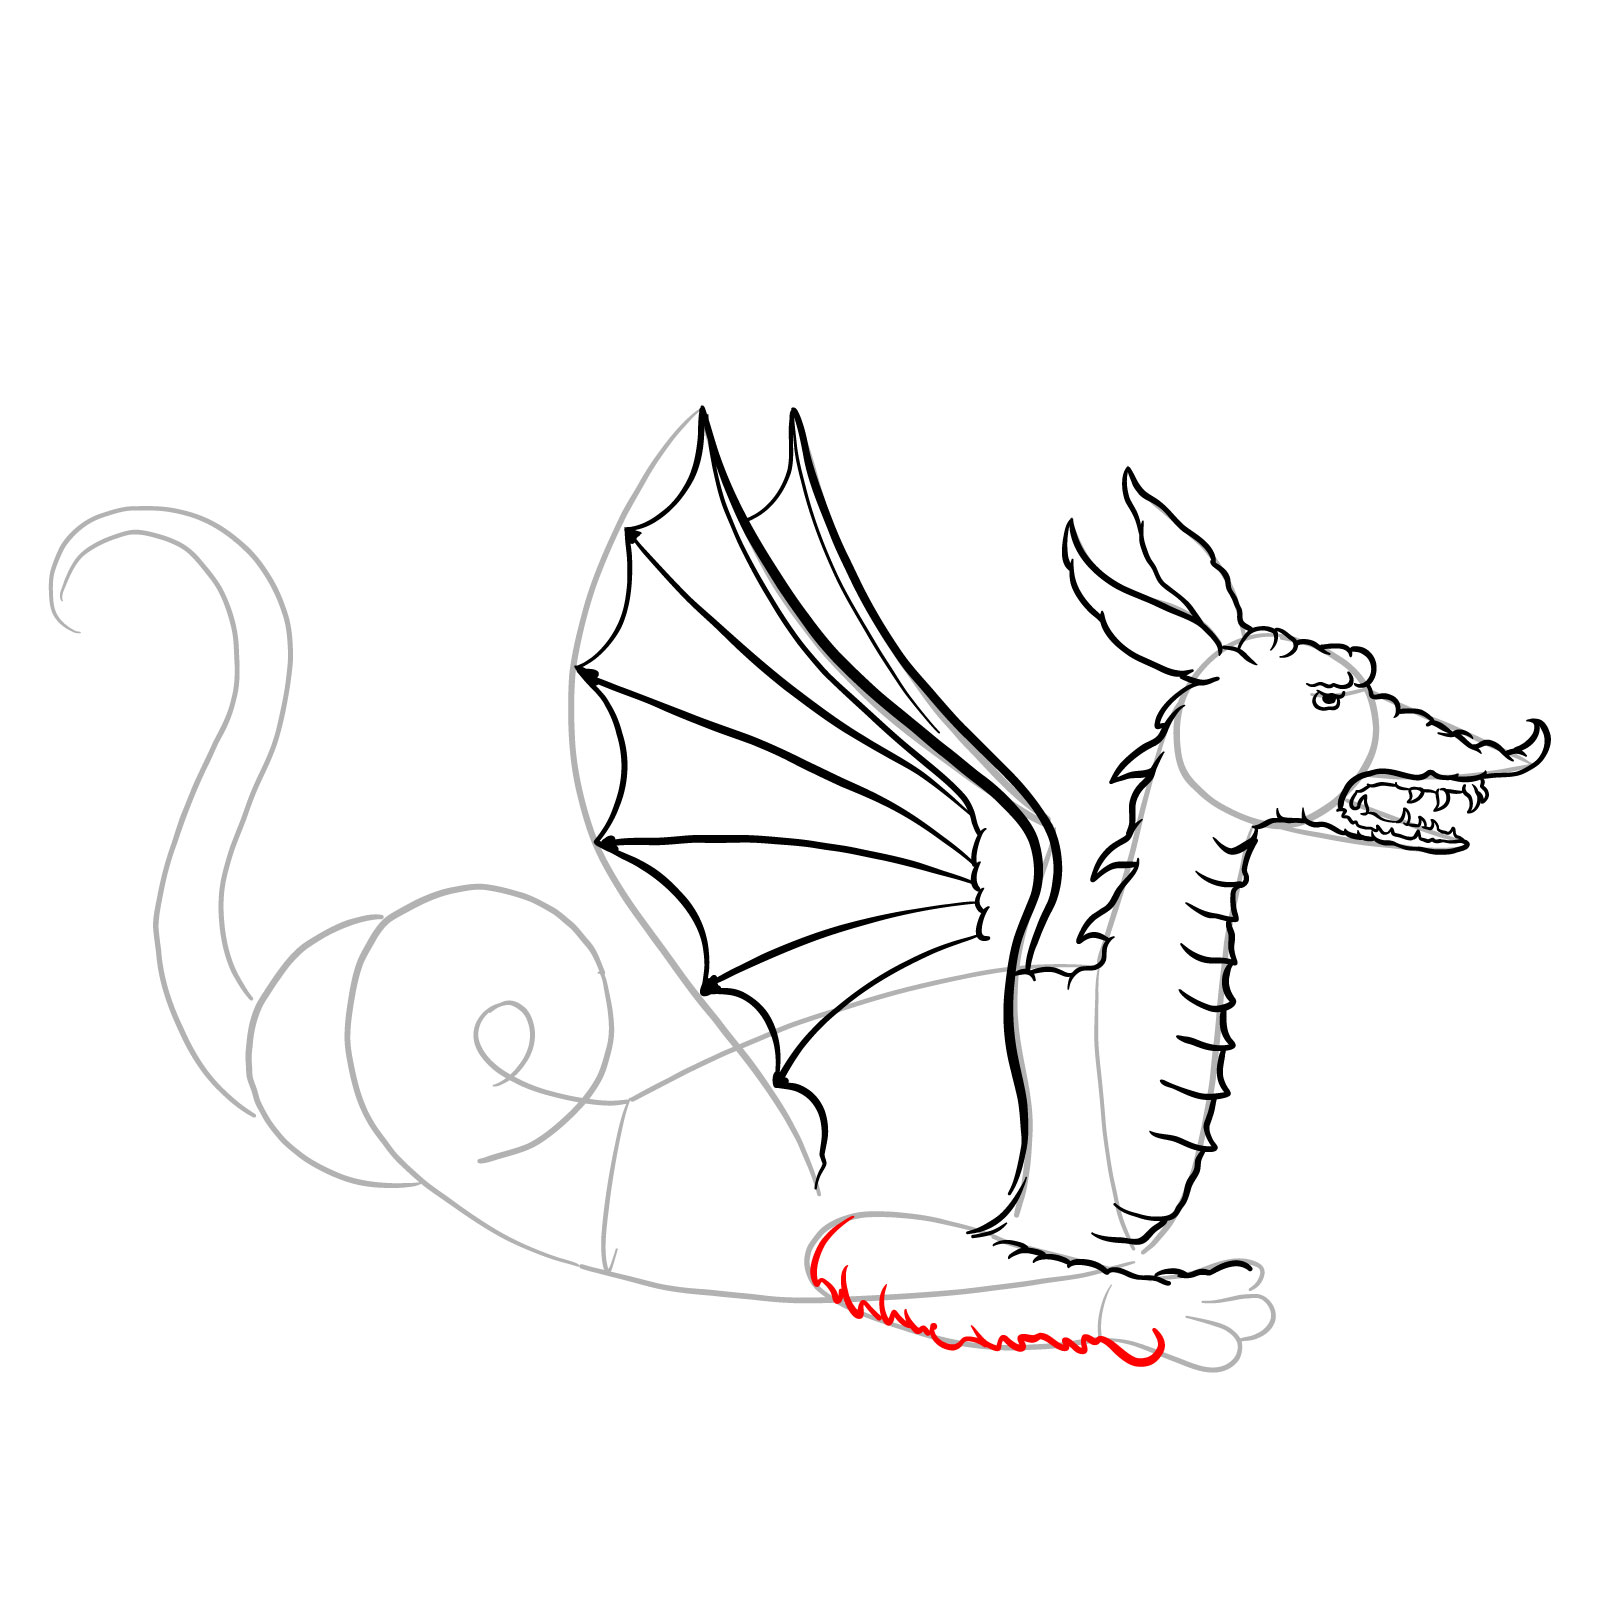 How to draw a Knucker dragon - step 19